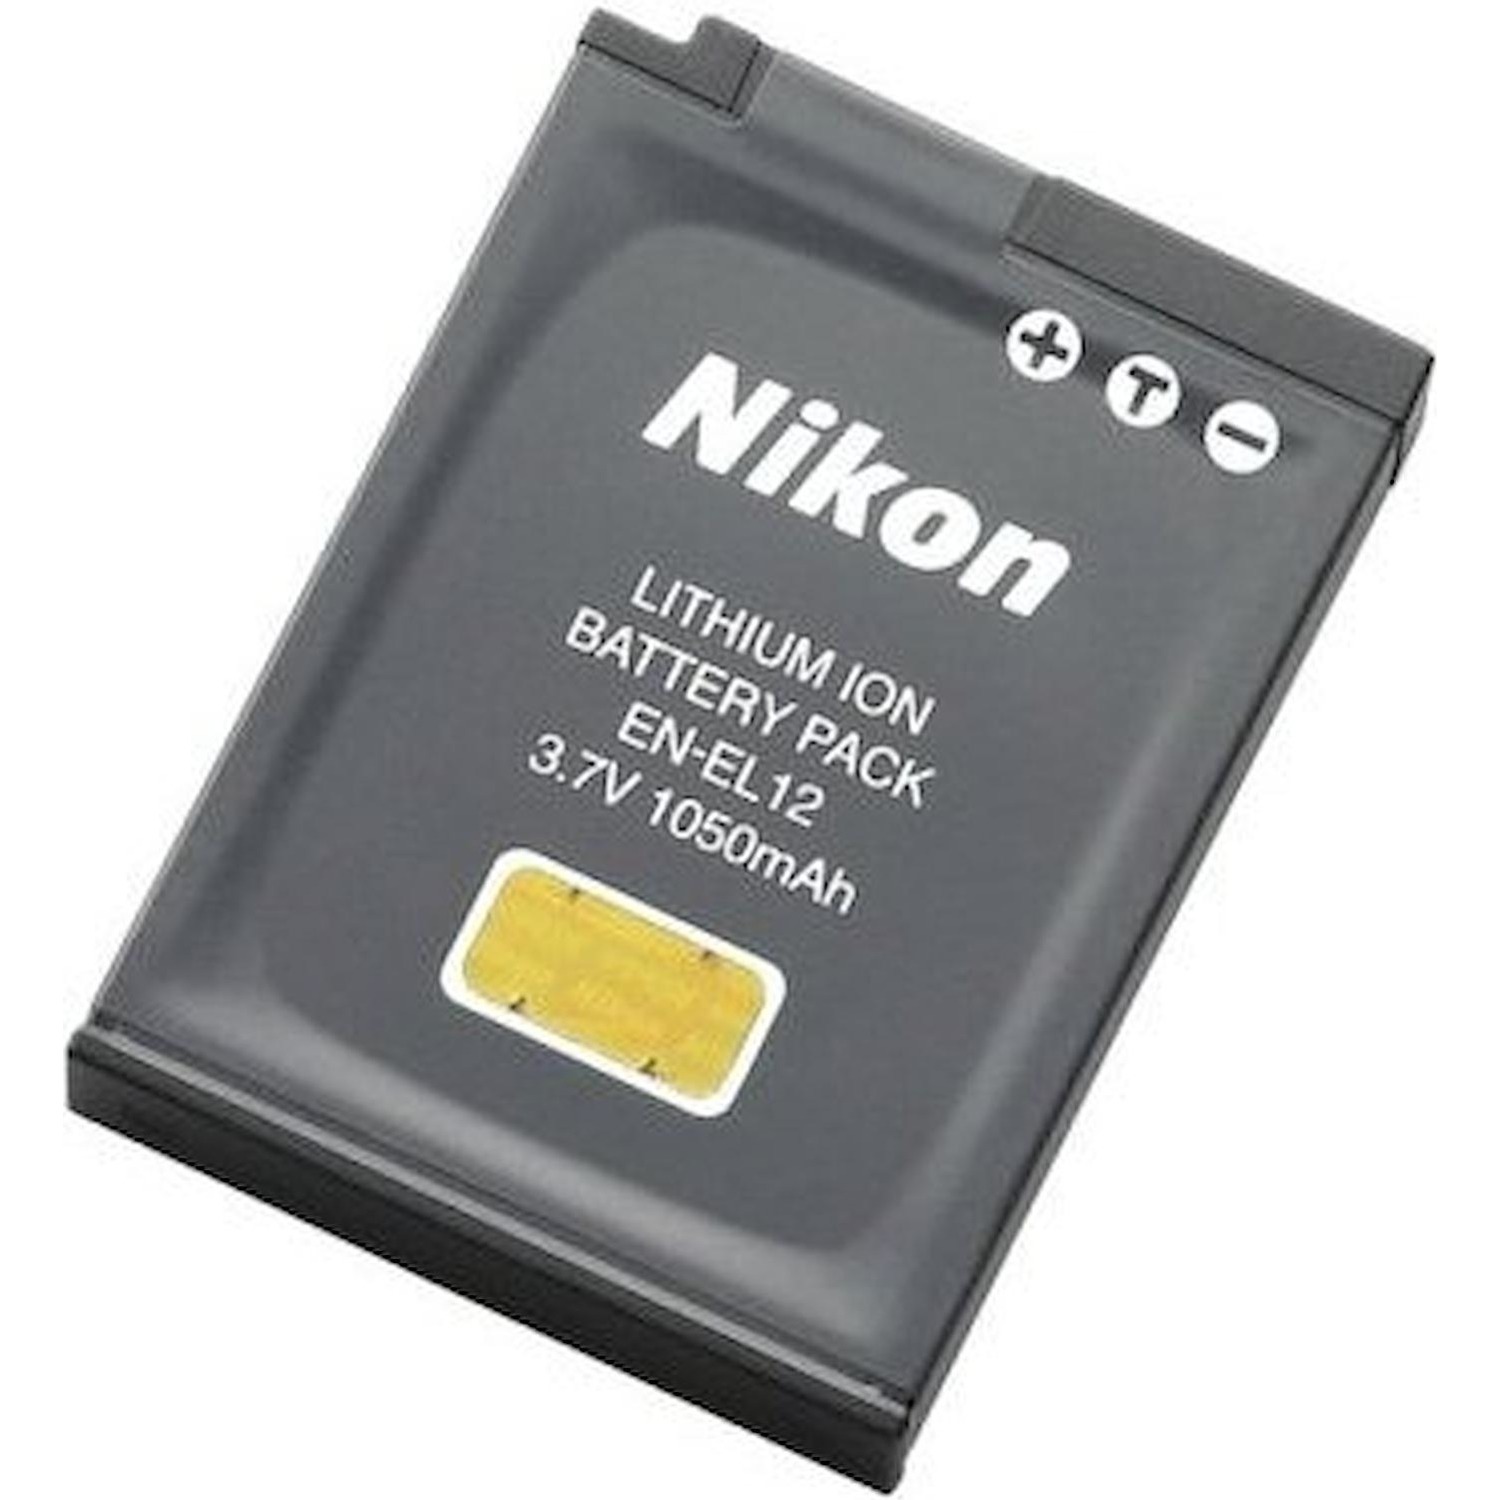 Immagine per Batteria Nikon EN-EL12 PER 8100/8000/1100/S9300 AW110 AW110 da DIMOStore